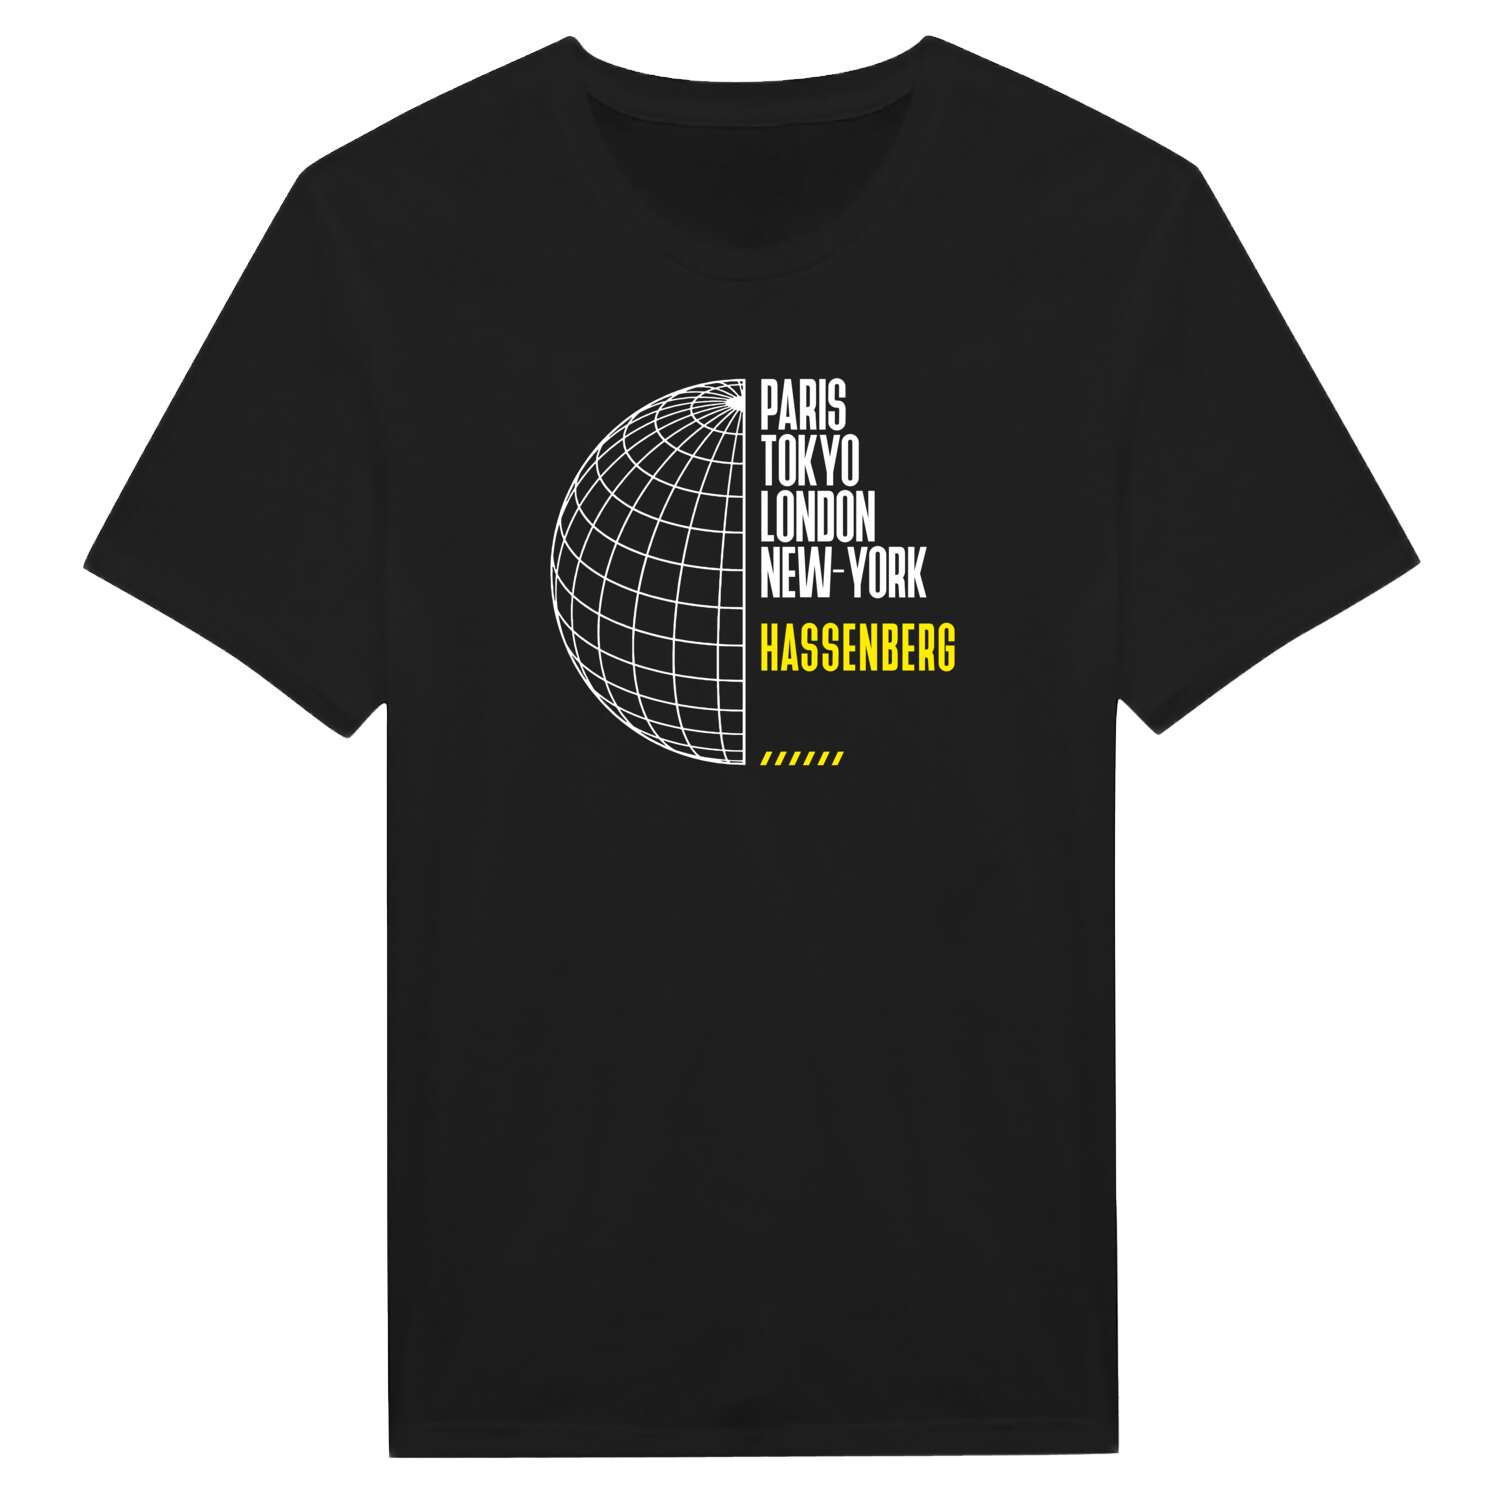 Hassenberg T-Shirt »Paris Tokyo London«